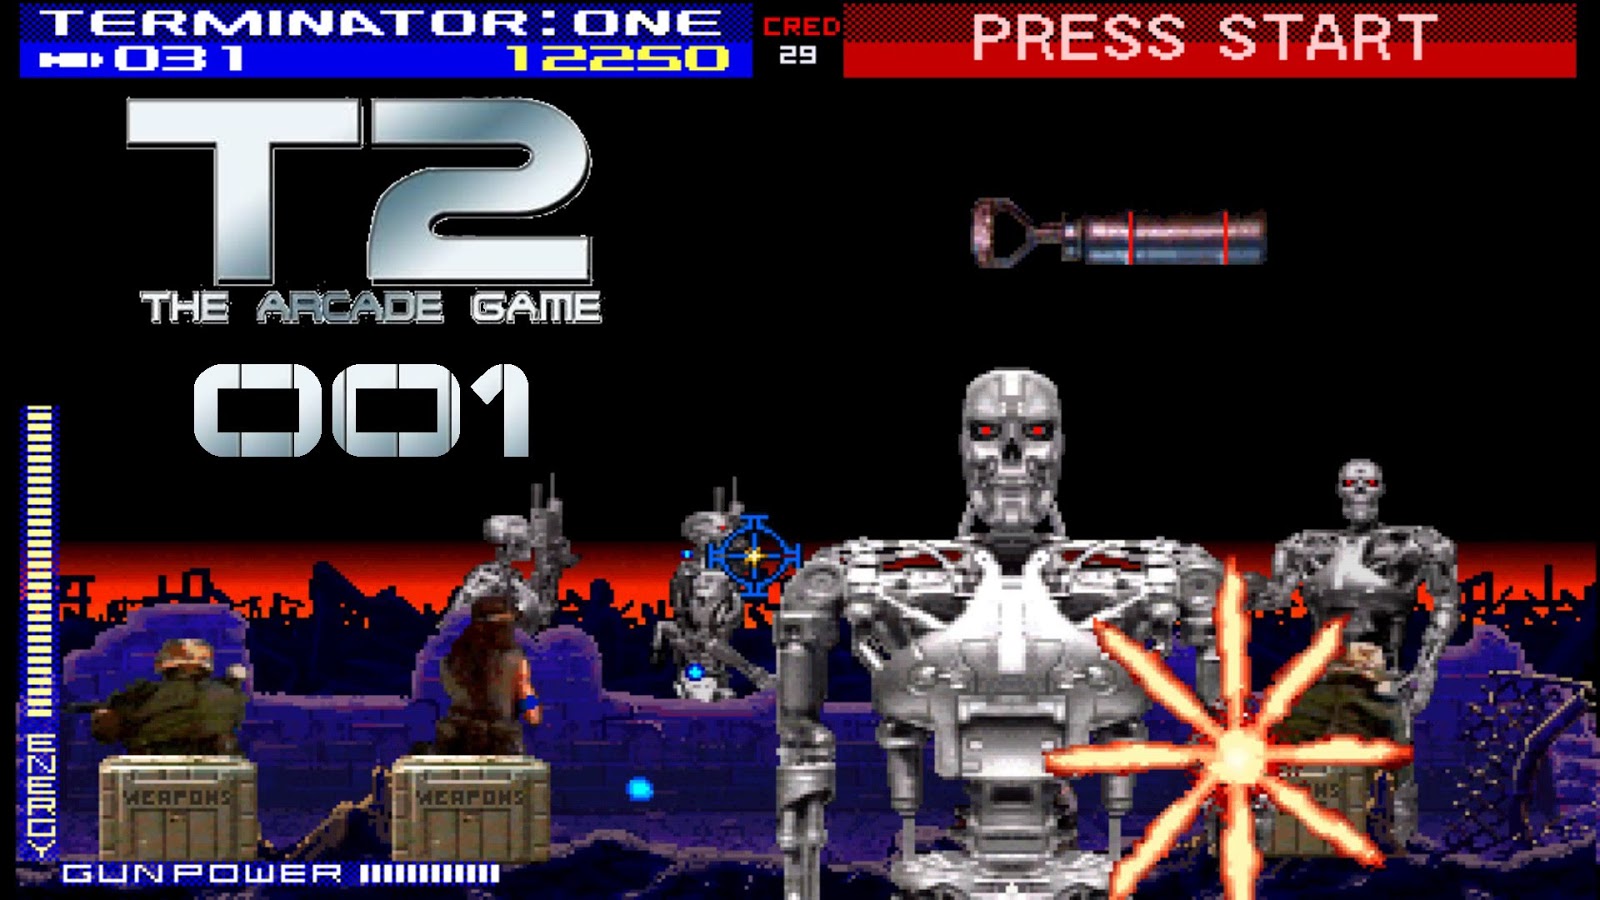 Игры terminator 2. The Terminator игра 1991. Терминатор 2 аркада сега. Терминатор 2 сега СД. Терминатор 2 Arcade game 1991.